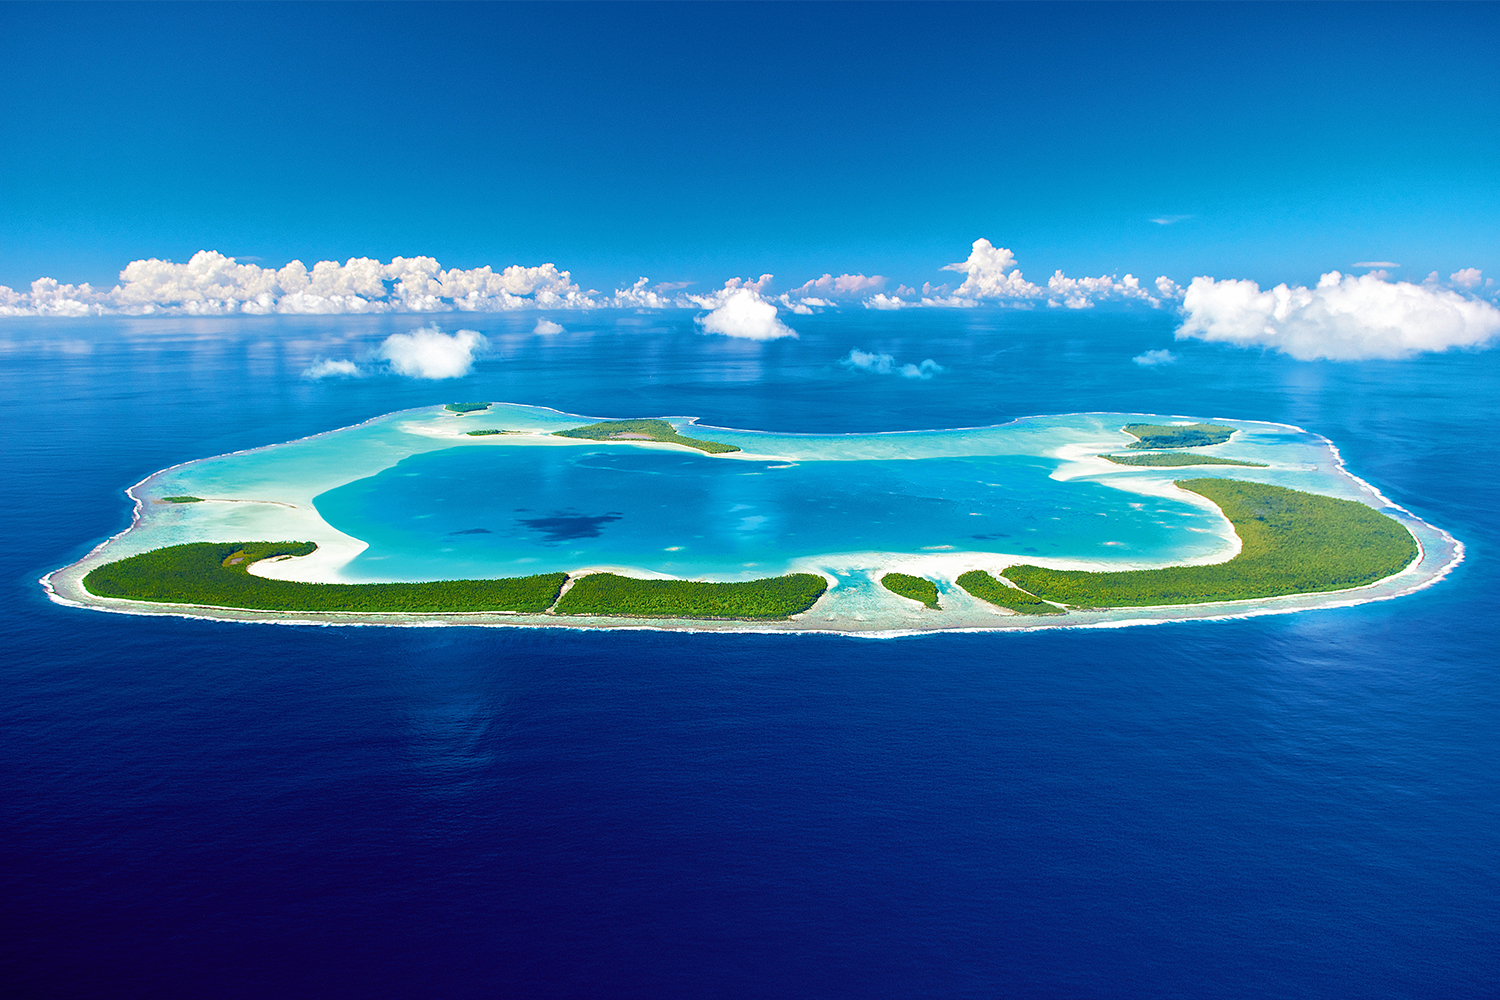 The Brando, French Polynesia, a remote, luxury island where Kim Kardashian and Barack Obama have stayed